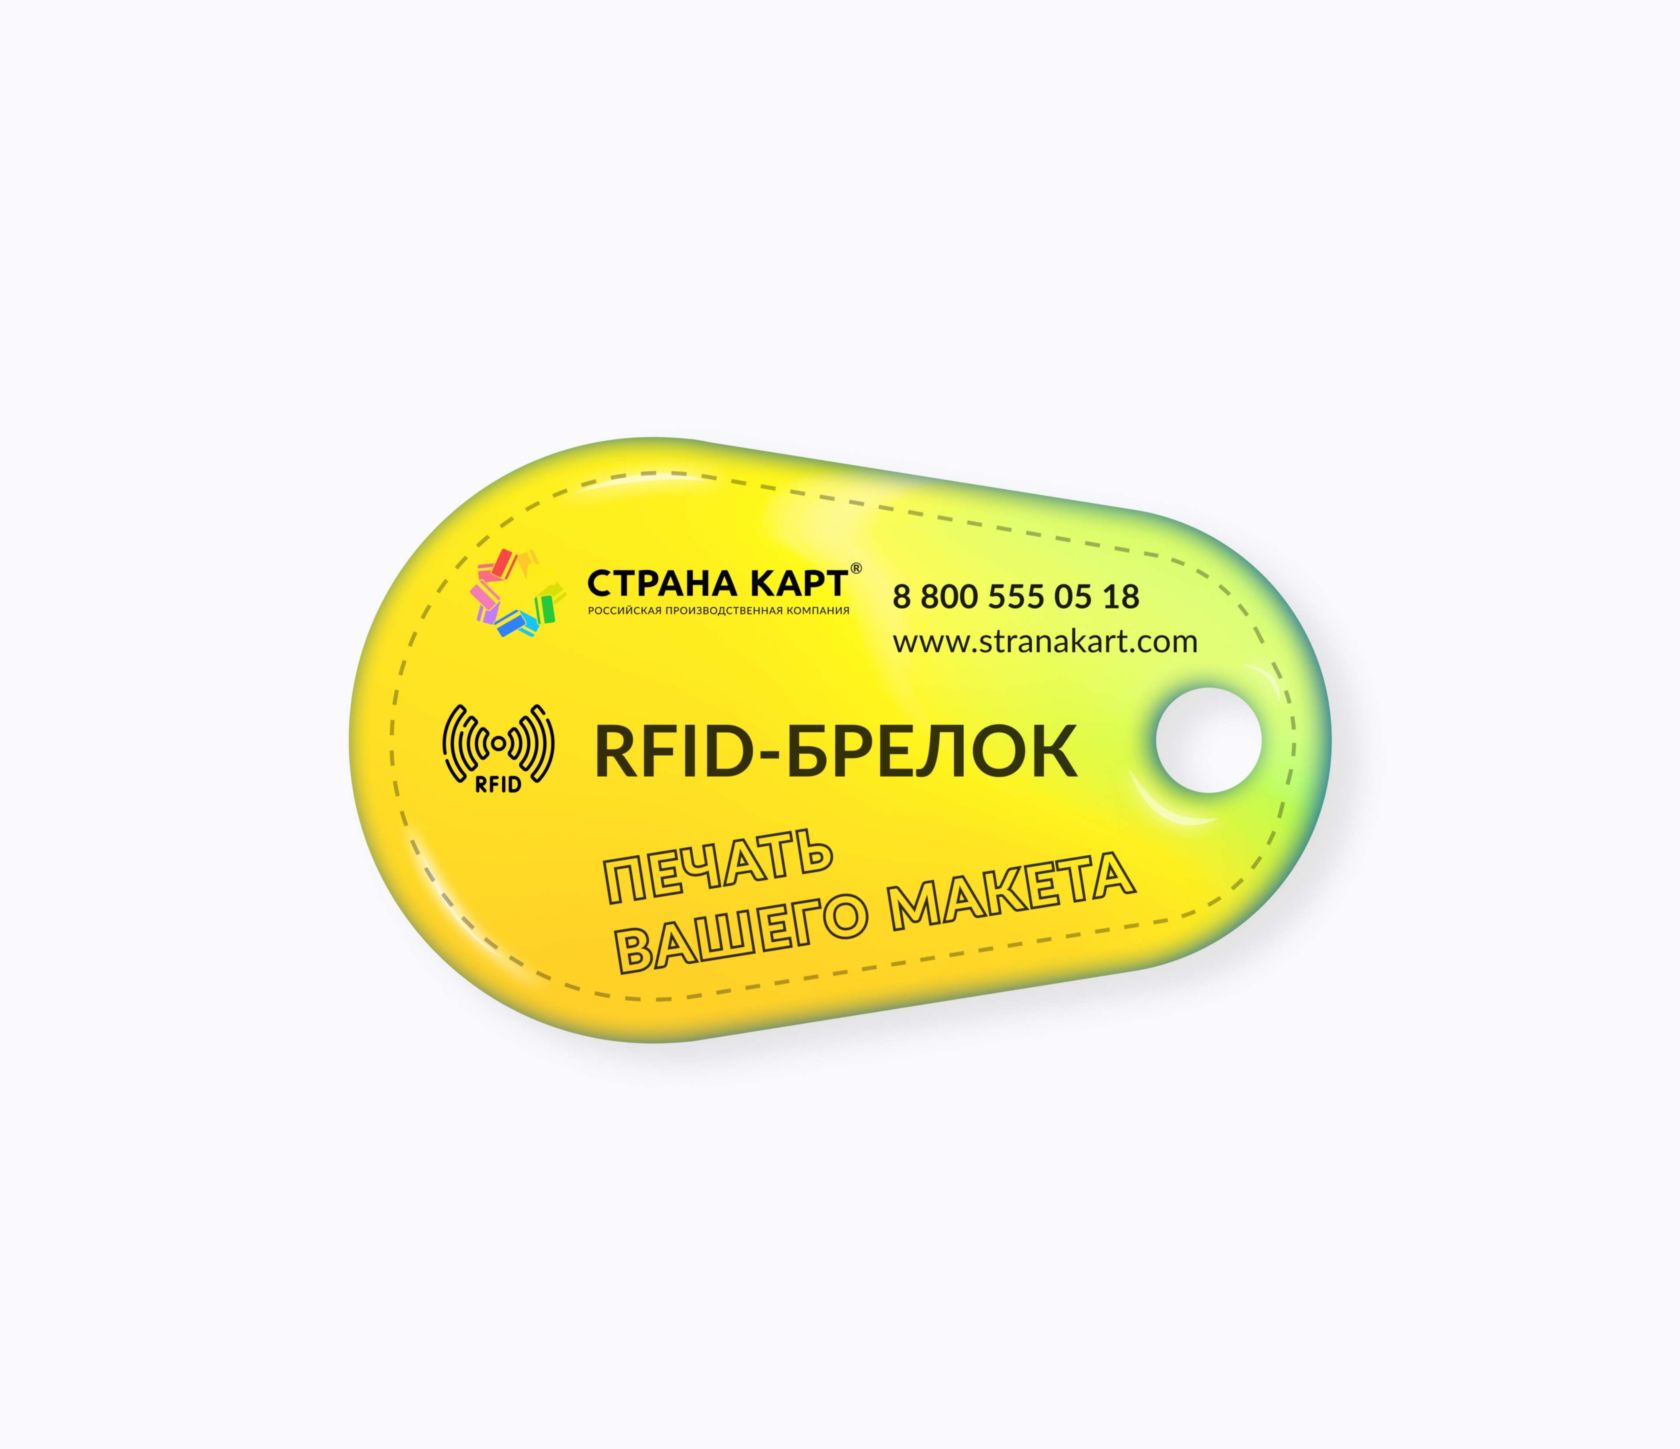 Каплевидные RFID-брелоки NEOKEY® с чипом для парковок RFID-брелоки NEOKEY® с чипом для парковок